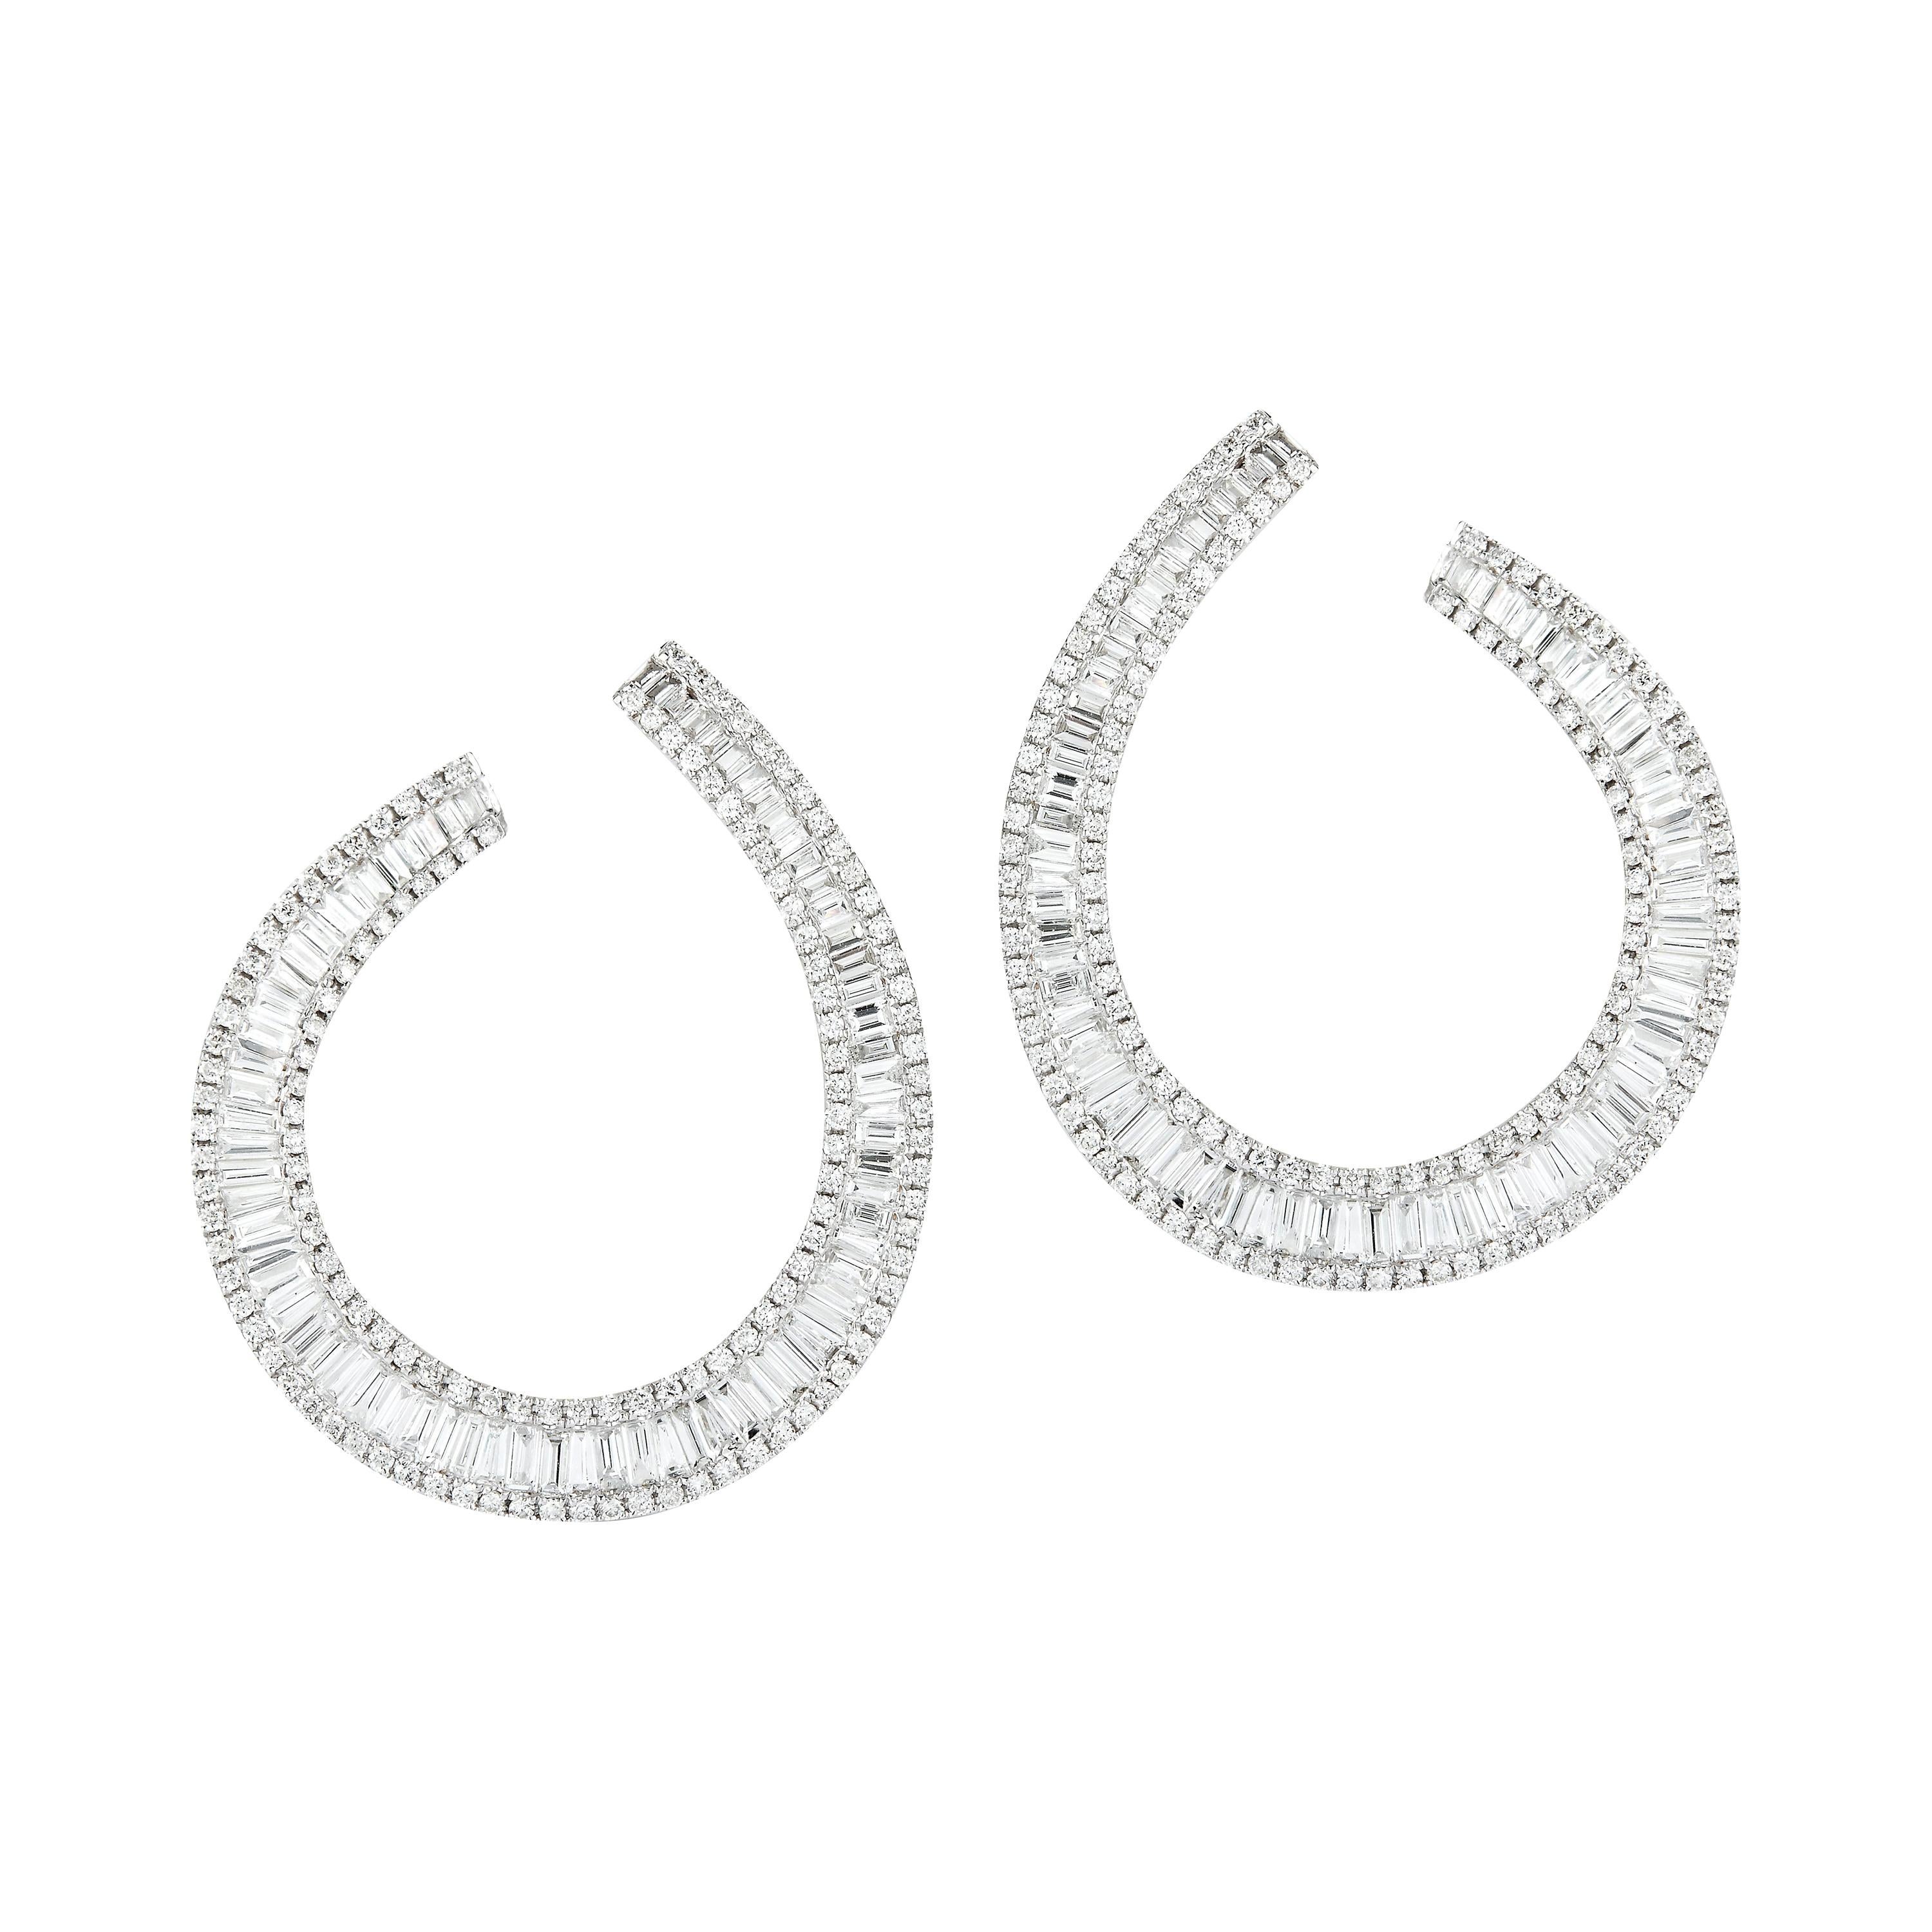 18 Karat Gold Diamond Hoop Earrings, 404 Diamonds, Total Weight 3.49 Carat